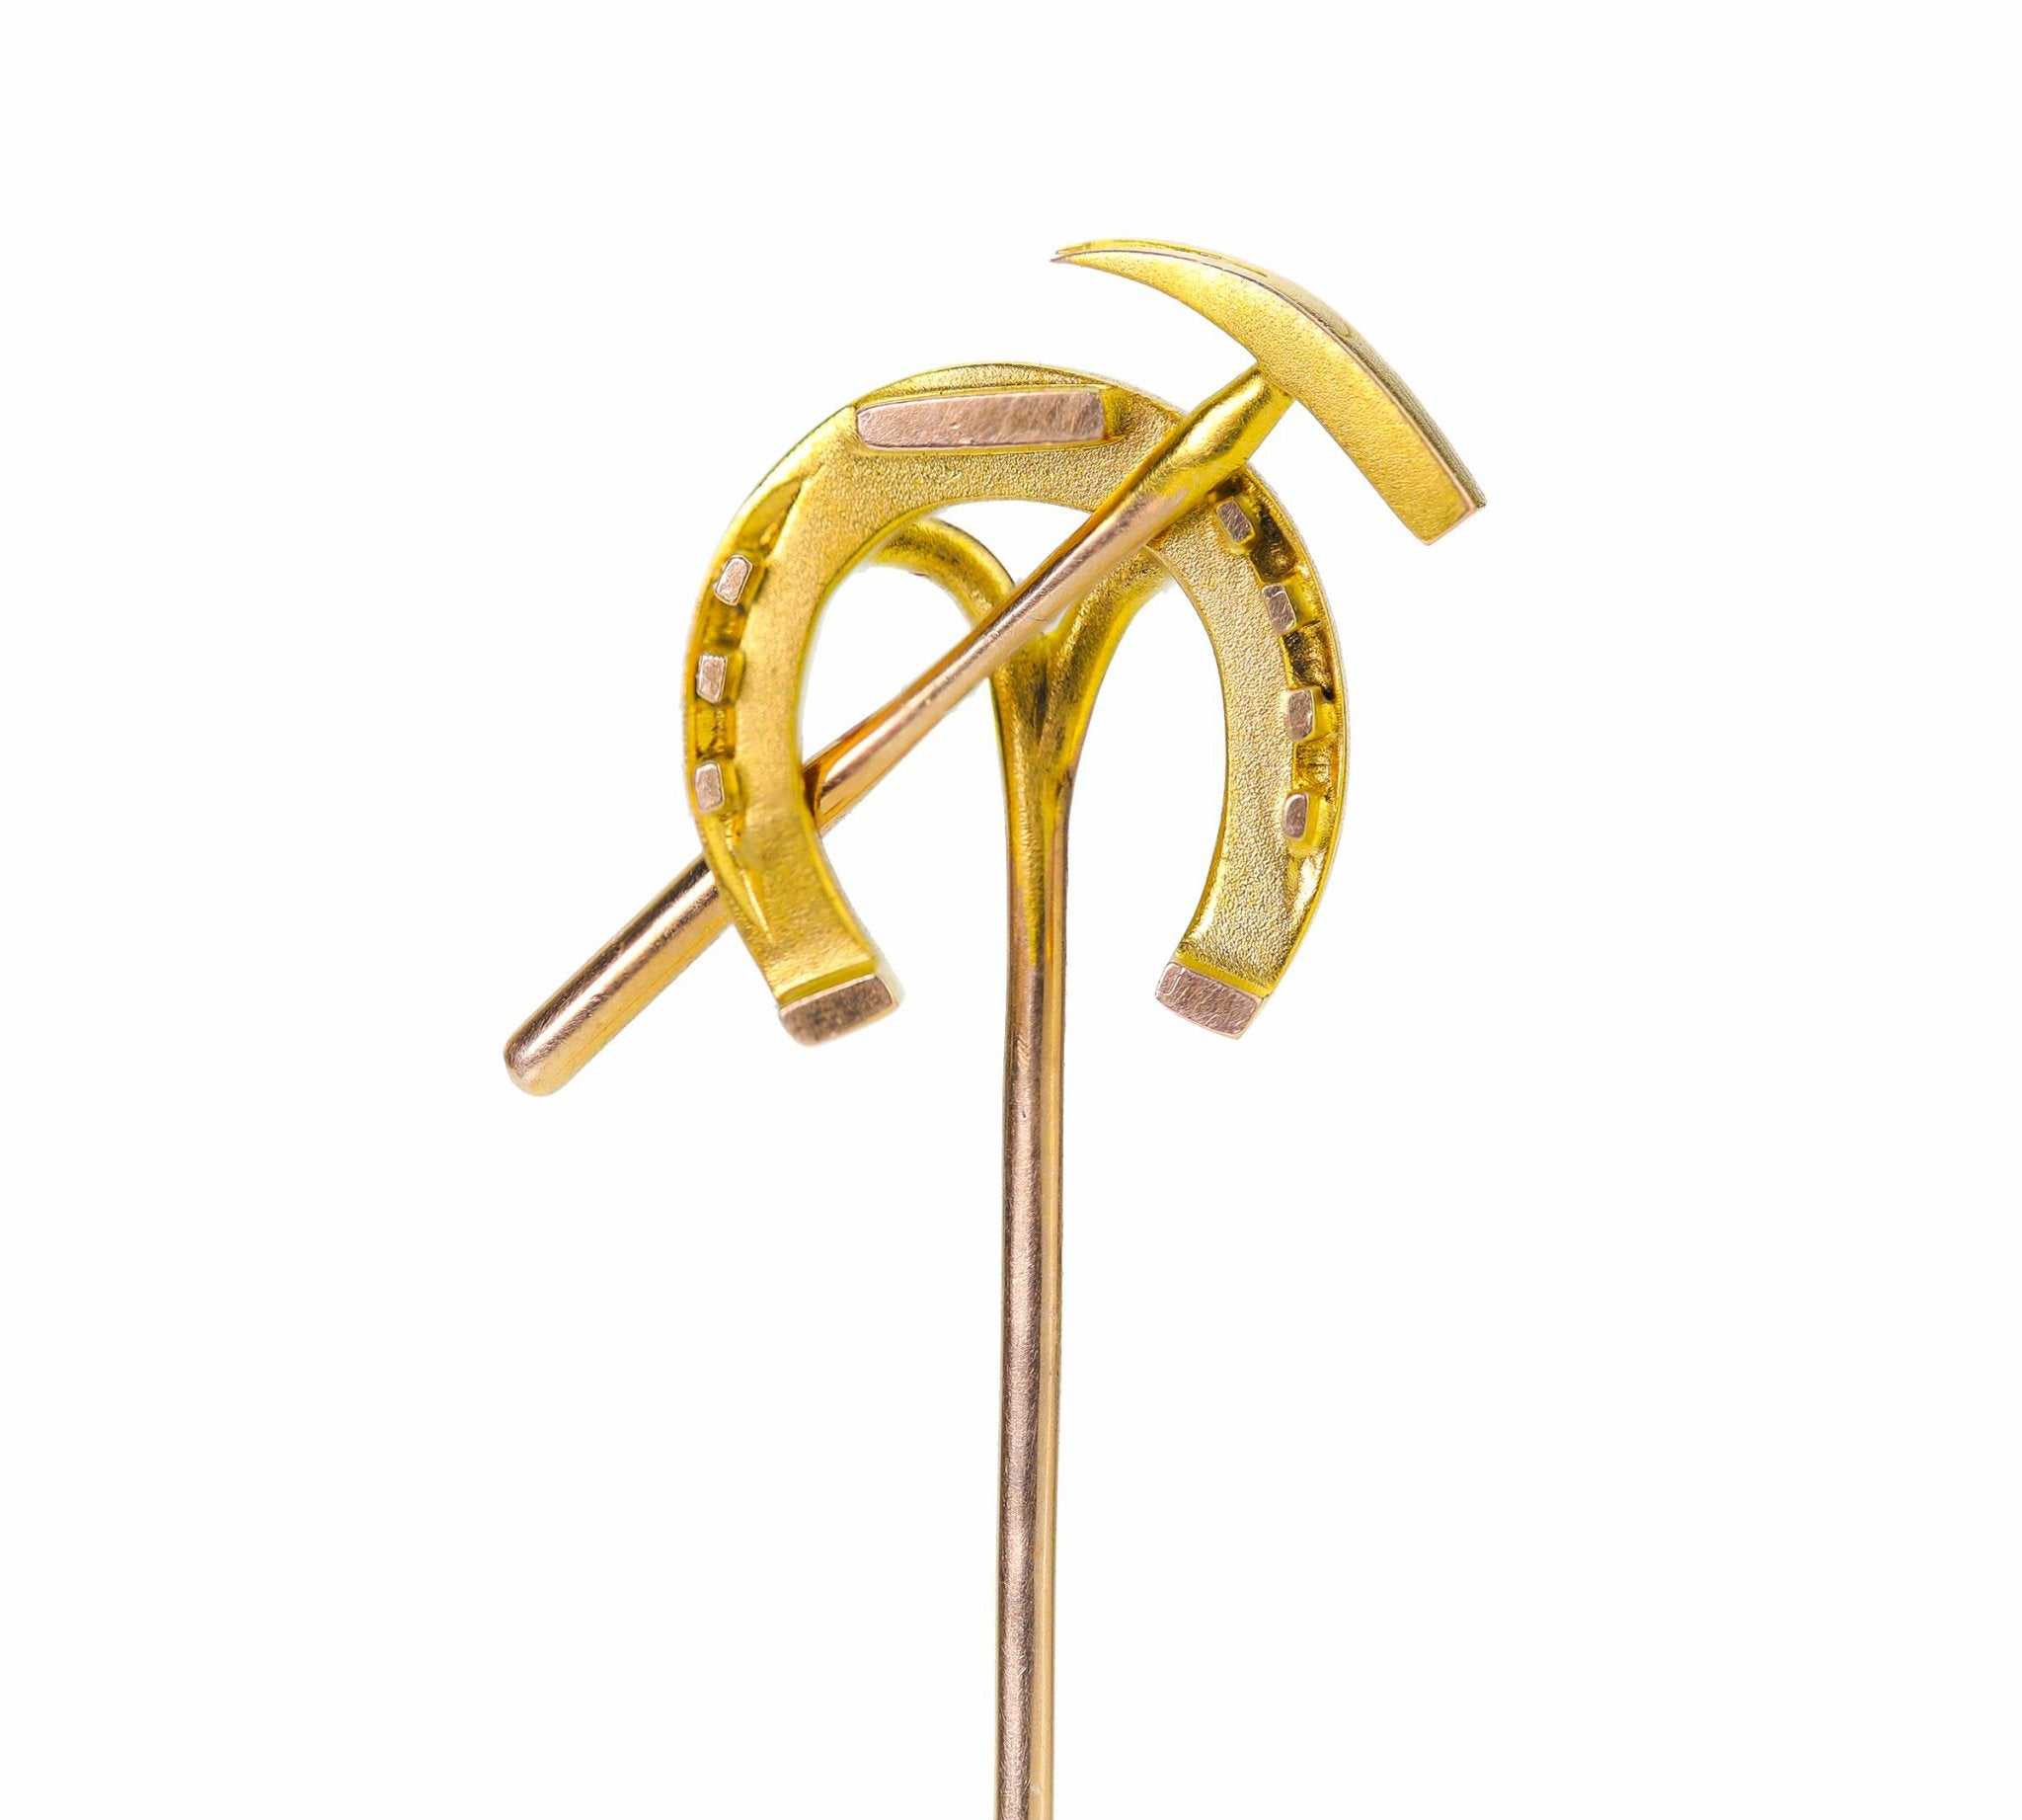 Antique Gold Horseshoe Hammer Stick Pin